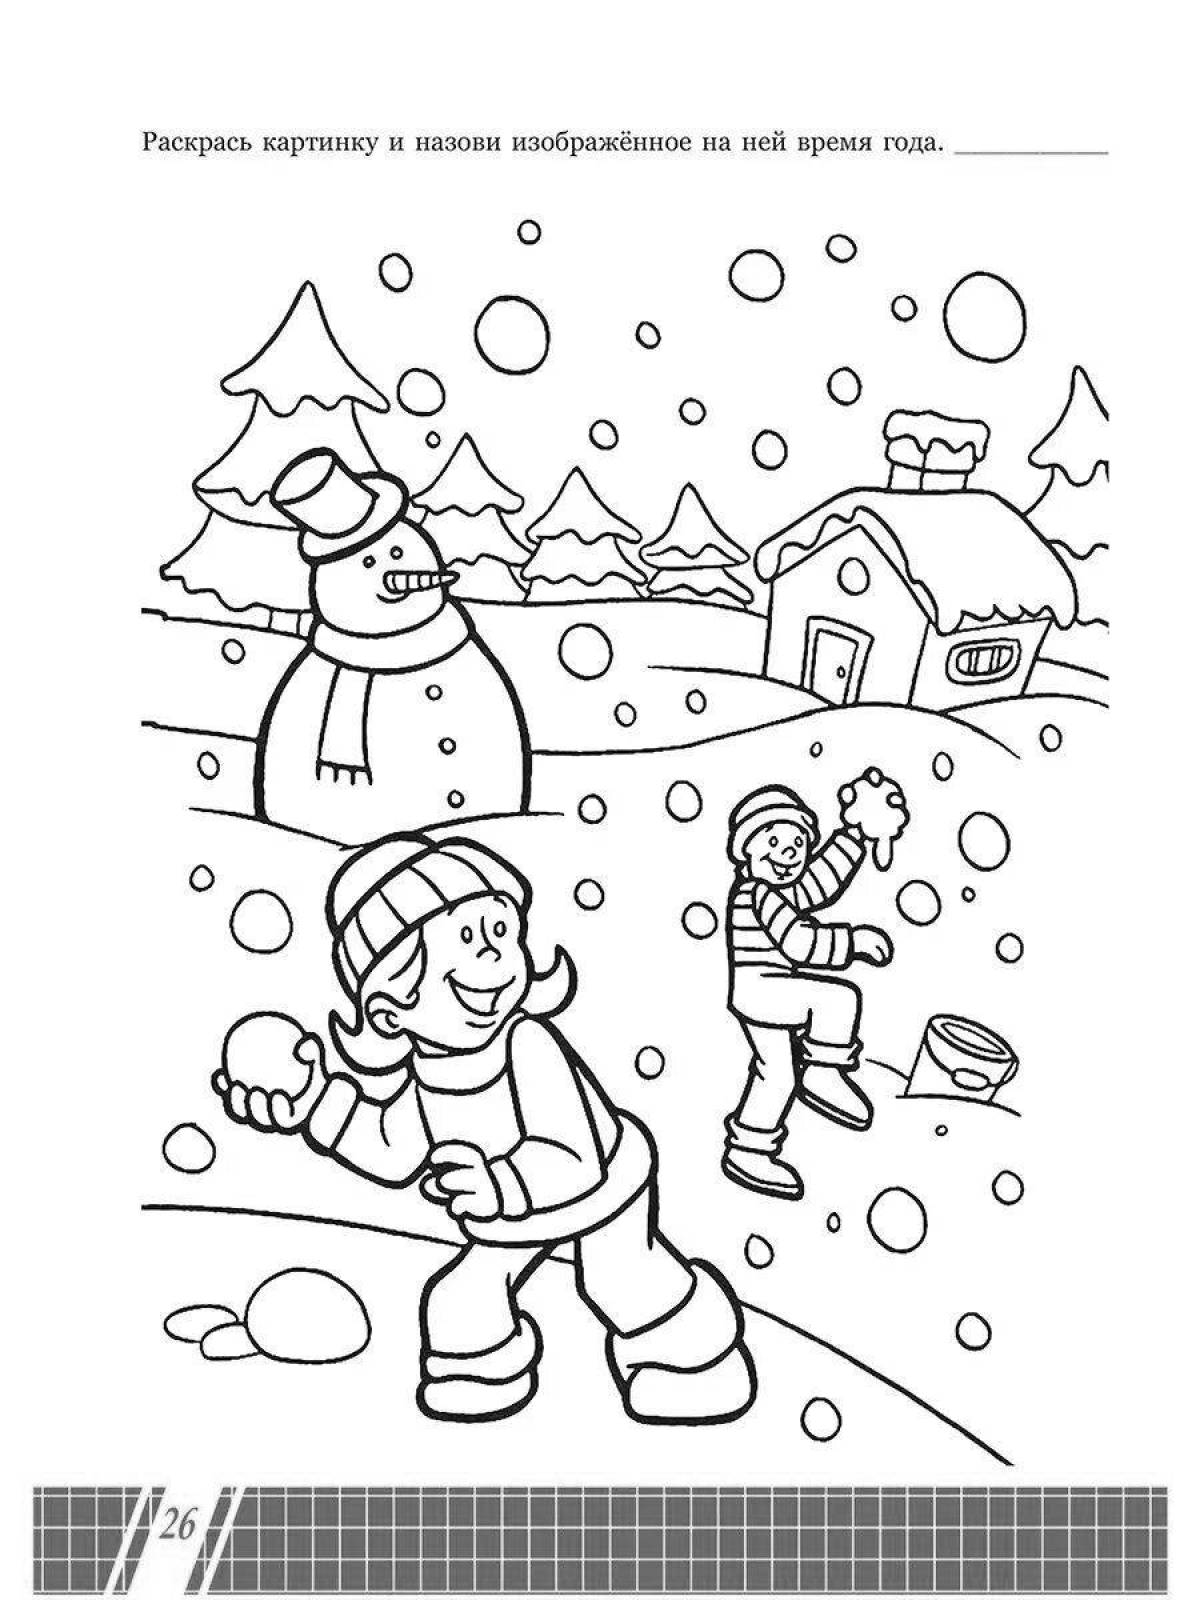 A fun winter coloring book for preschoolers